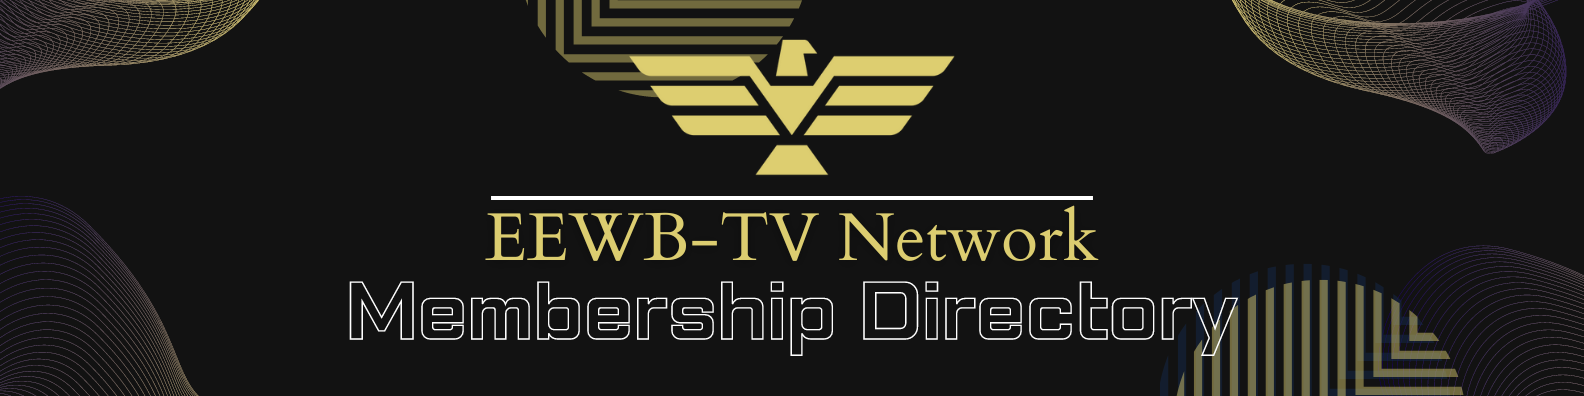 EEWB-TV Network Membership Directory